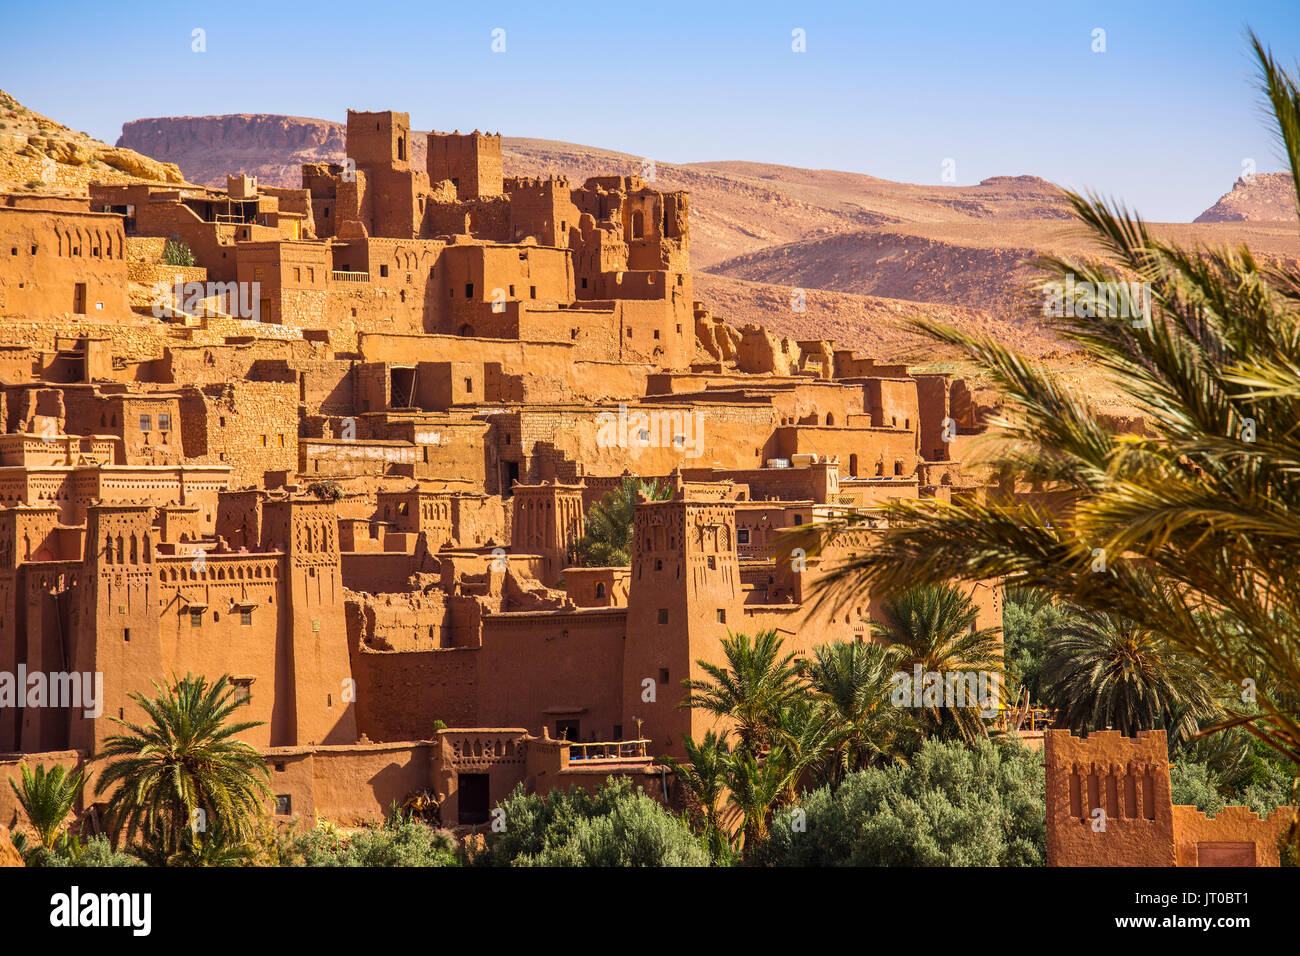 Ksar Ait Benhaddou, alte Berber adobe-brick Dorf oder Kasbah, Ouarzazate Provinz. UNESCO-Weltkulturerbe. Marokko, Maghreb Nordafrika Stockfoto